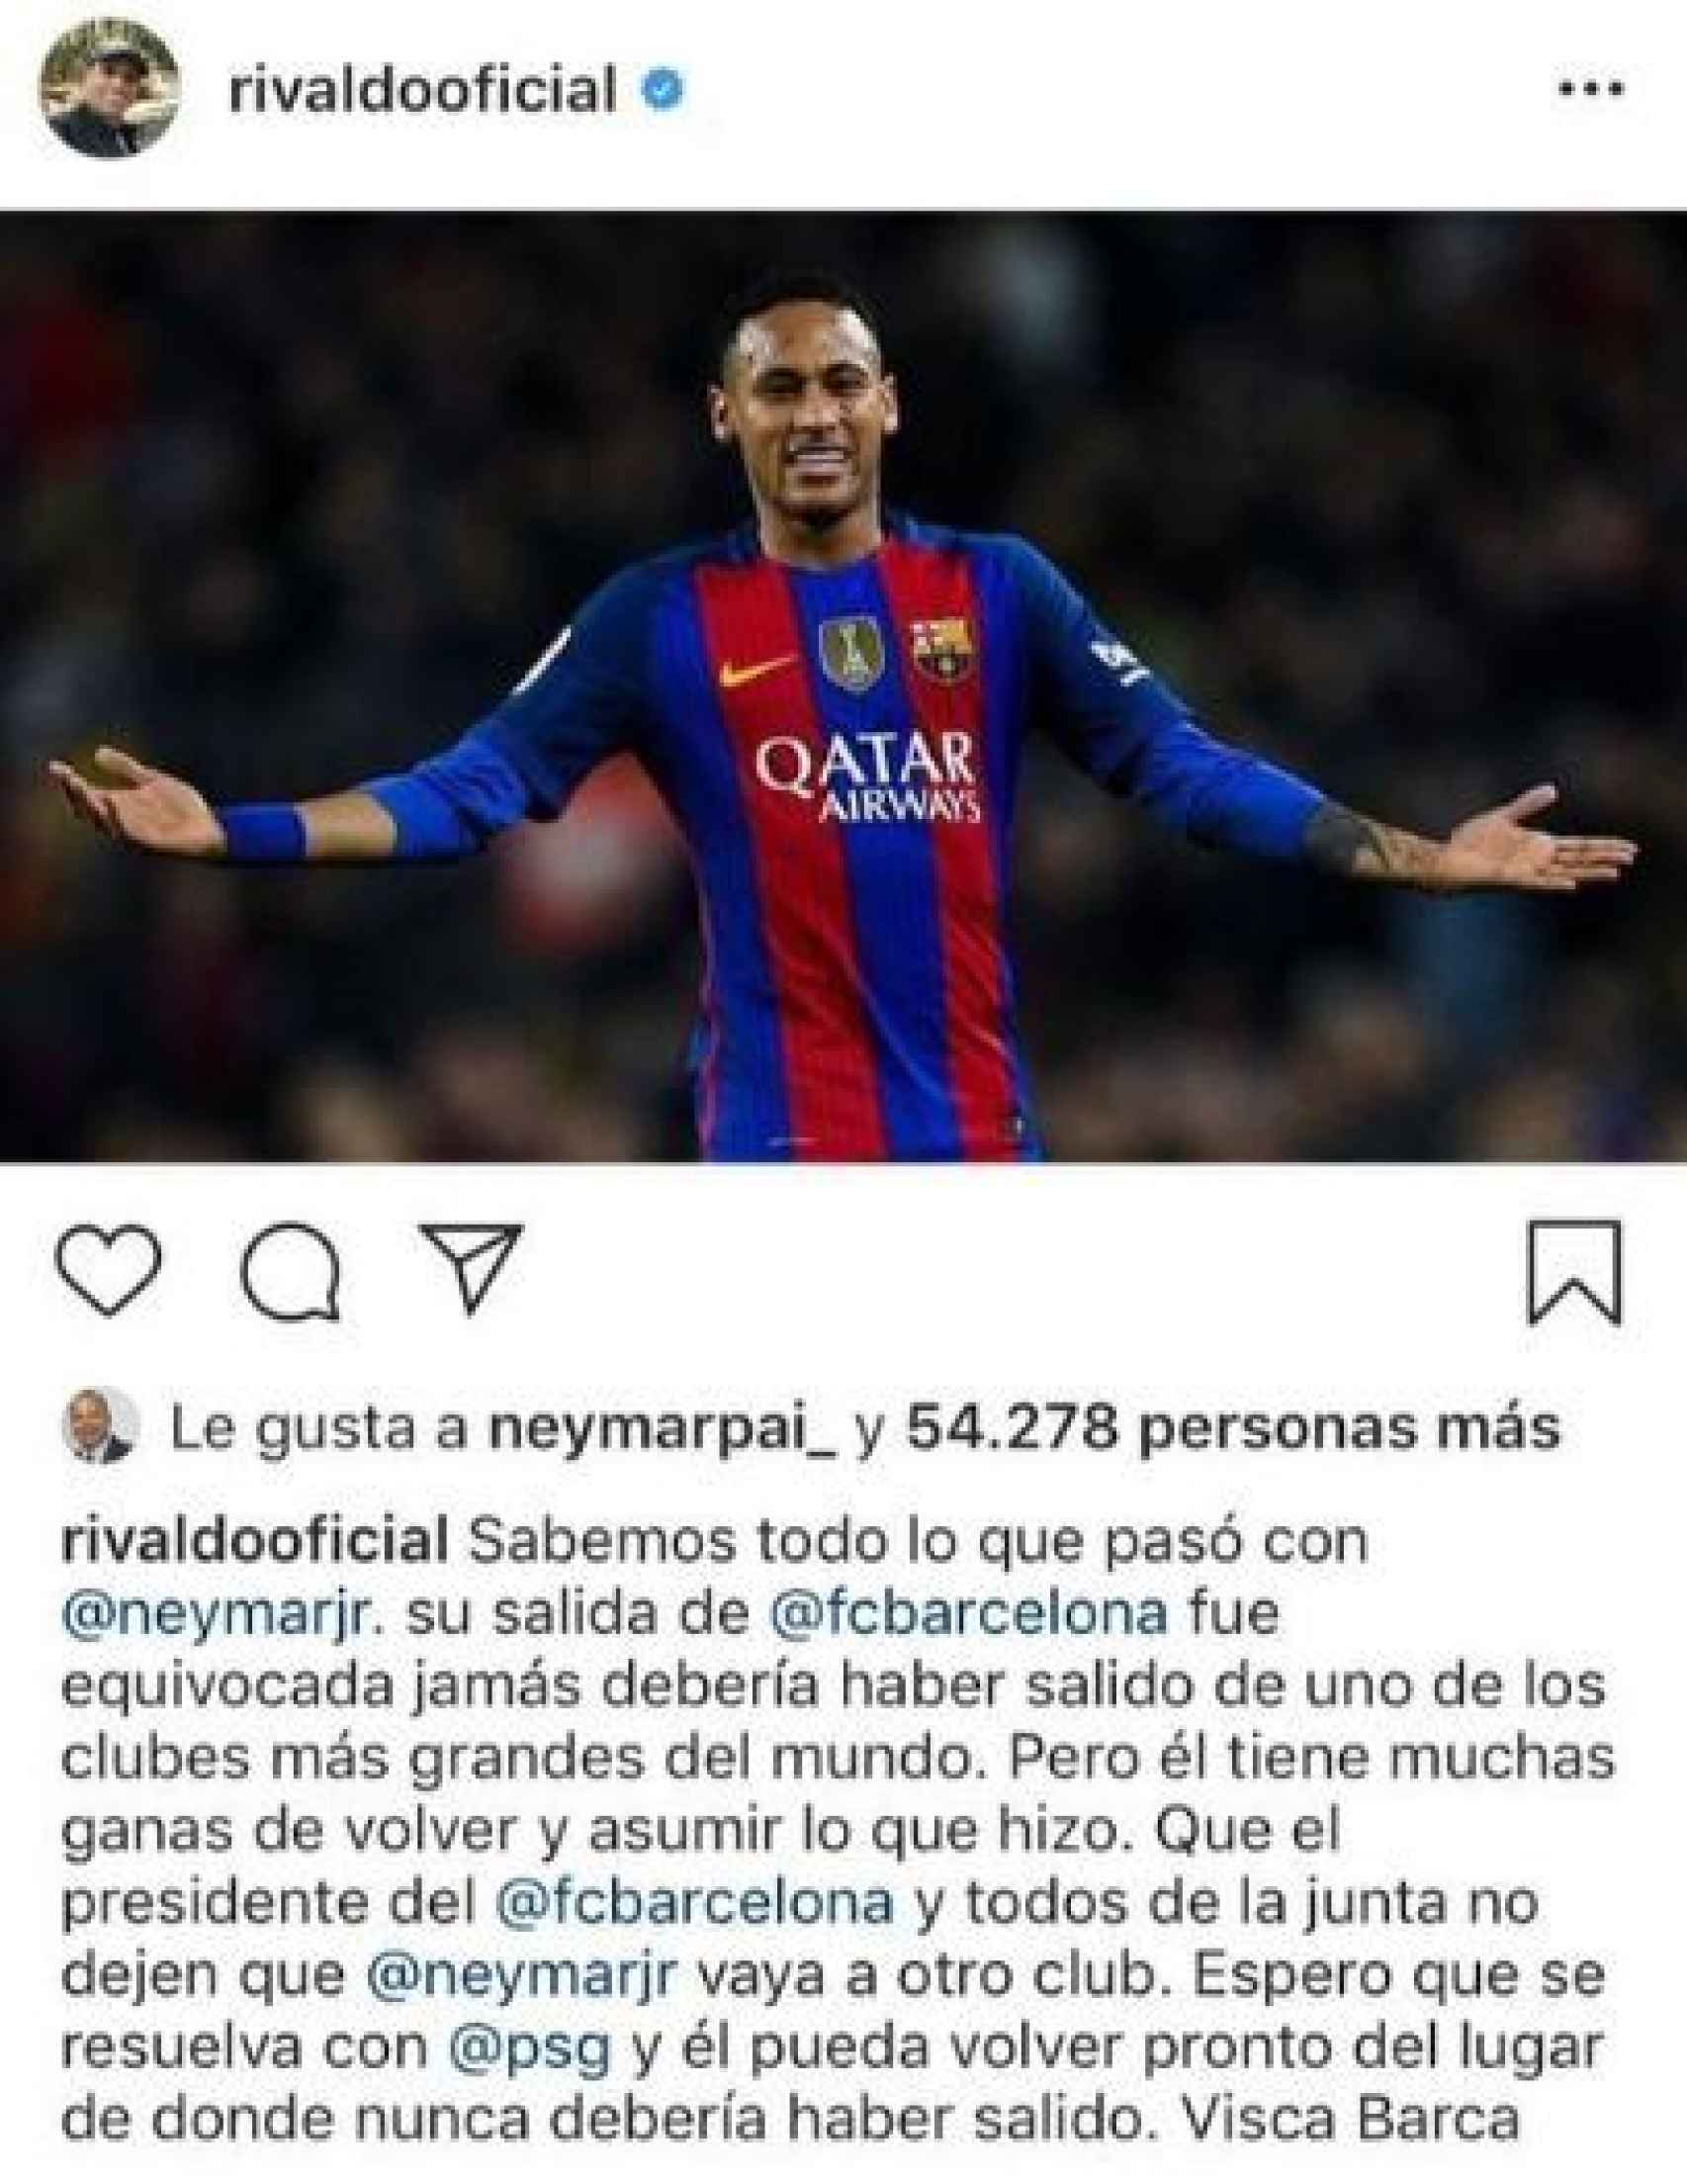 El padre d Neymar le da a 'me gusta' a la publicación de Rivaldo